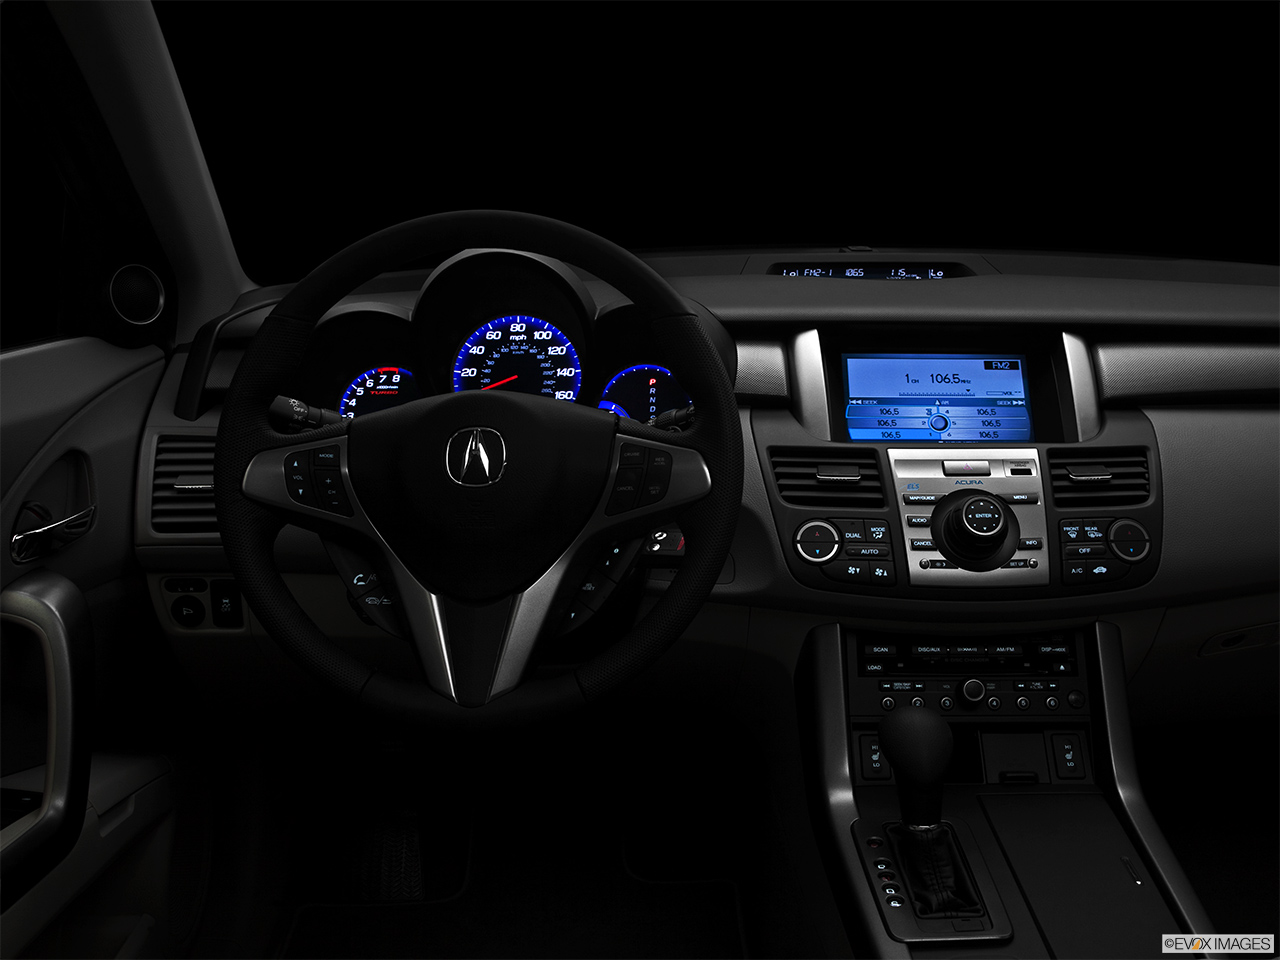 2012 Acura RDX RDX Centered wide dash shot - "night" shot. 